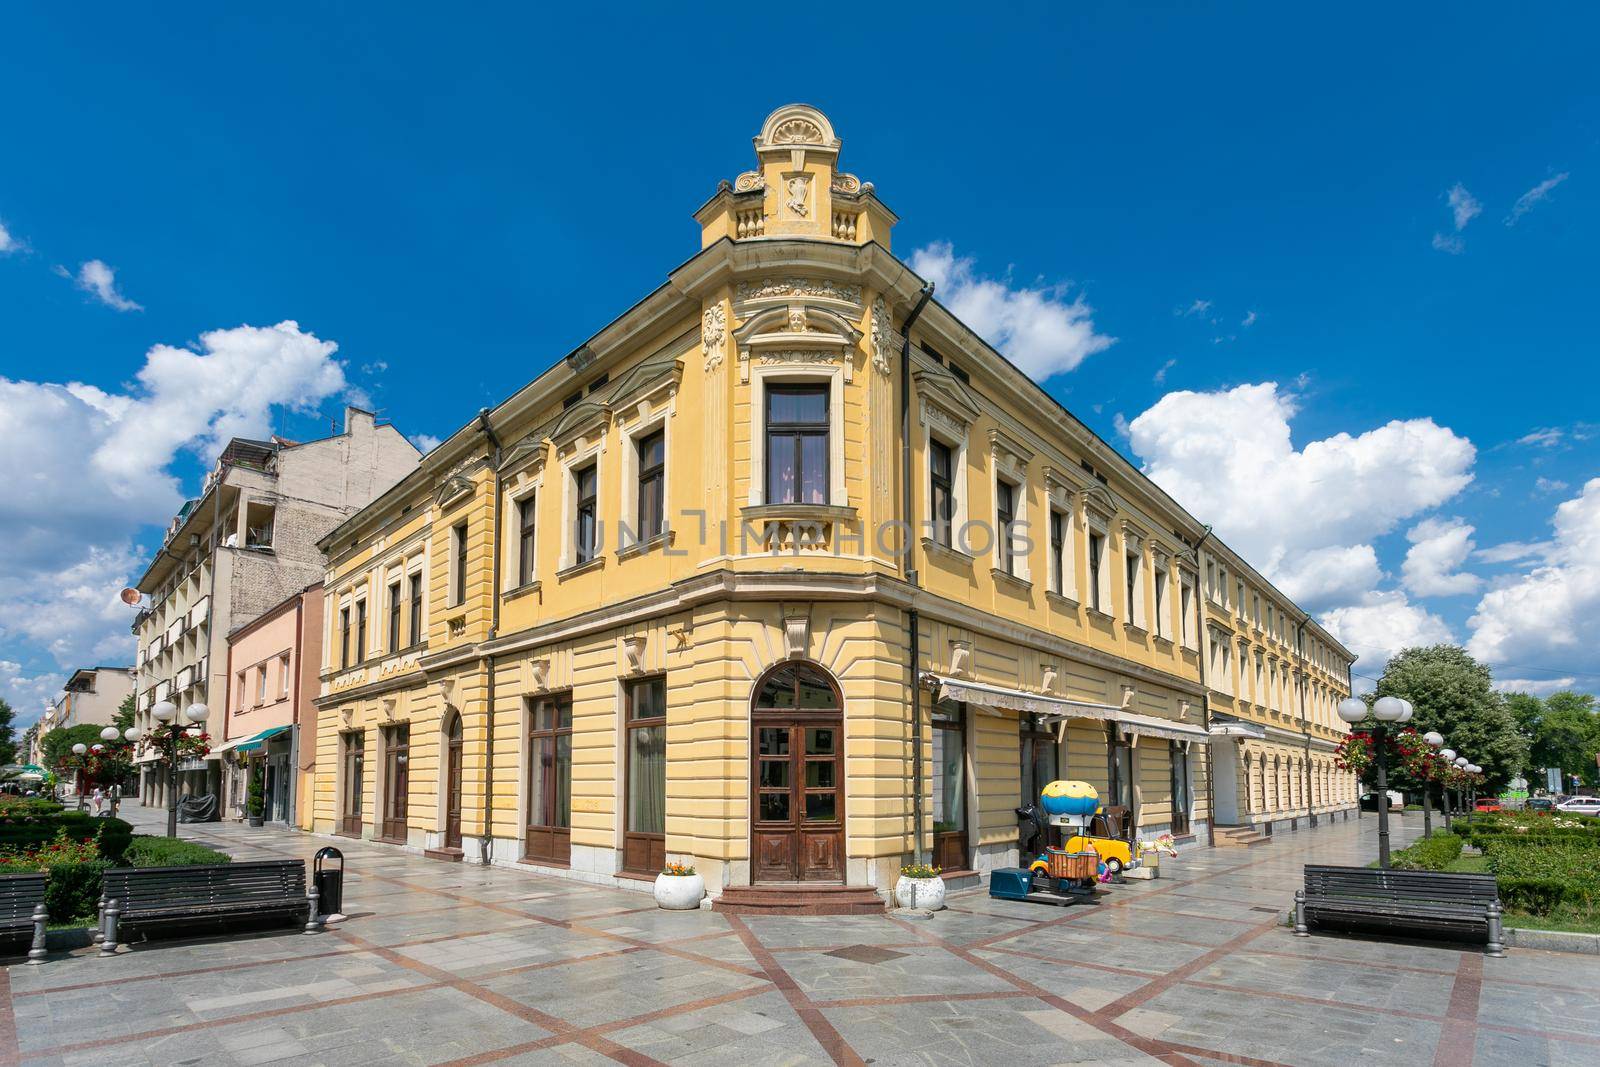 Valjevo, Serbia - June 26, 2022: Grand Hotel - a famous building in the center of the pedestrian and shopping zone in Valjevo